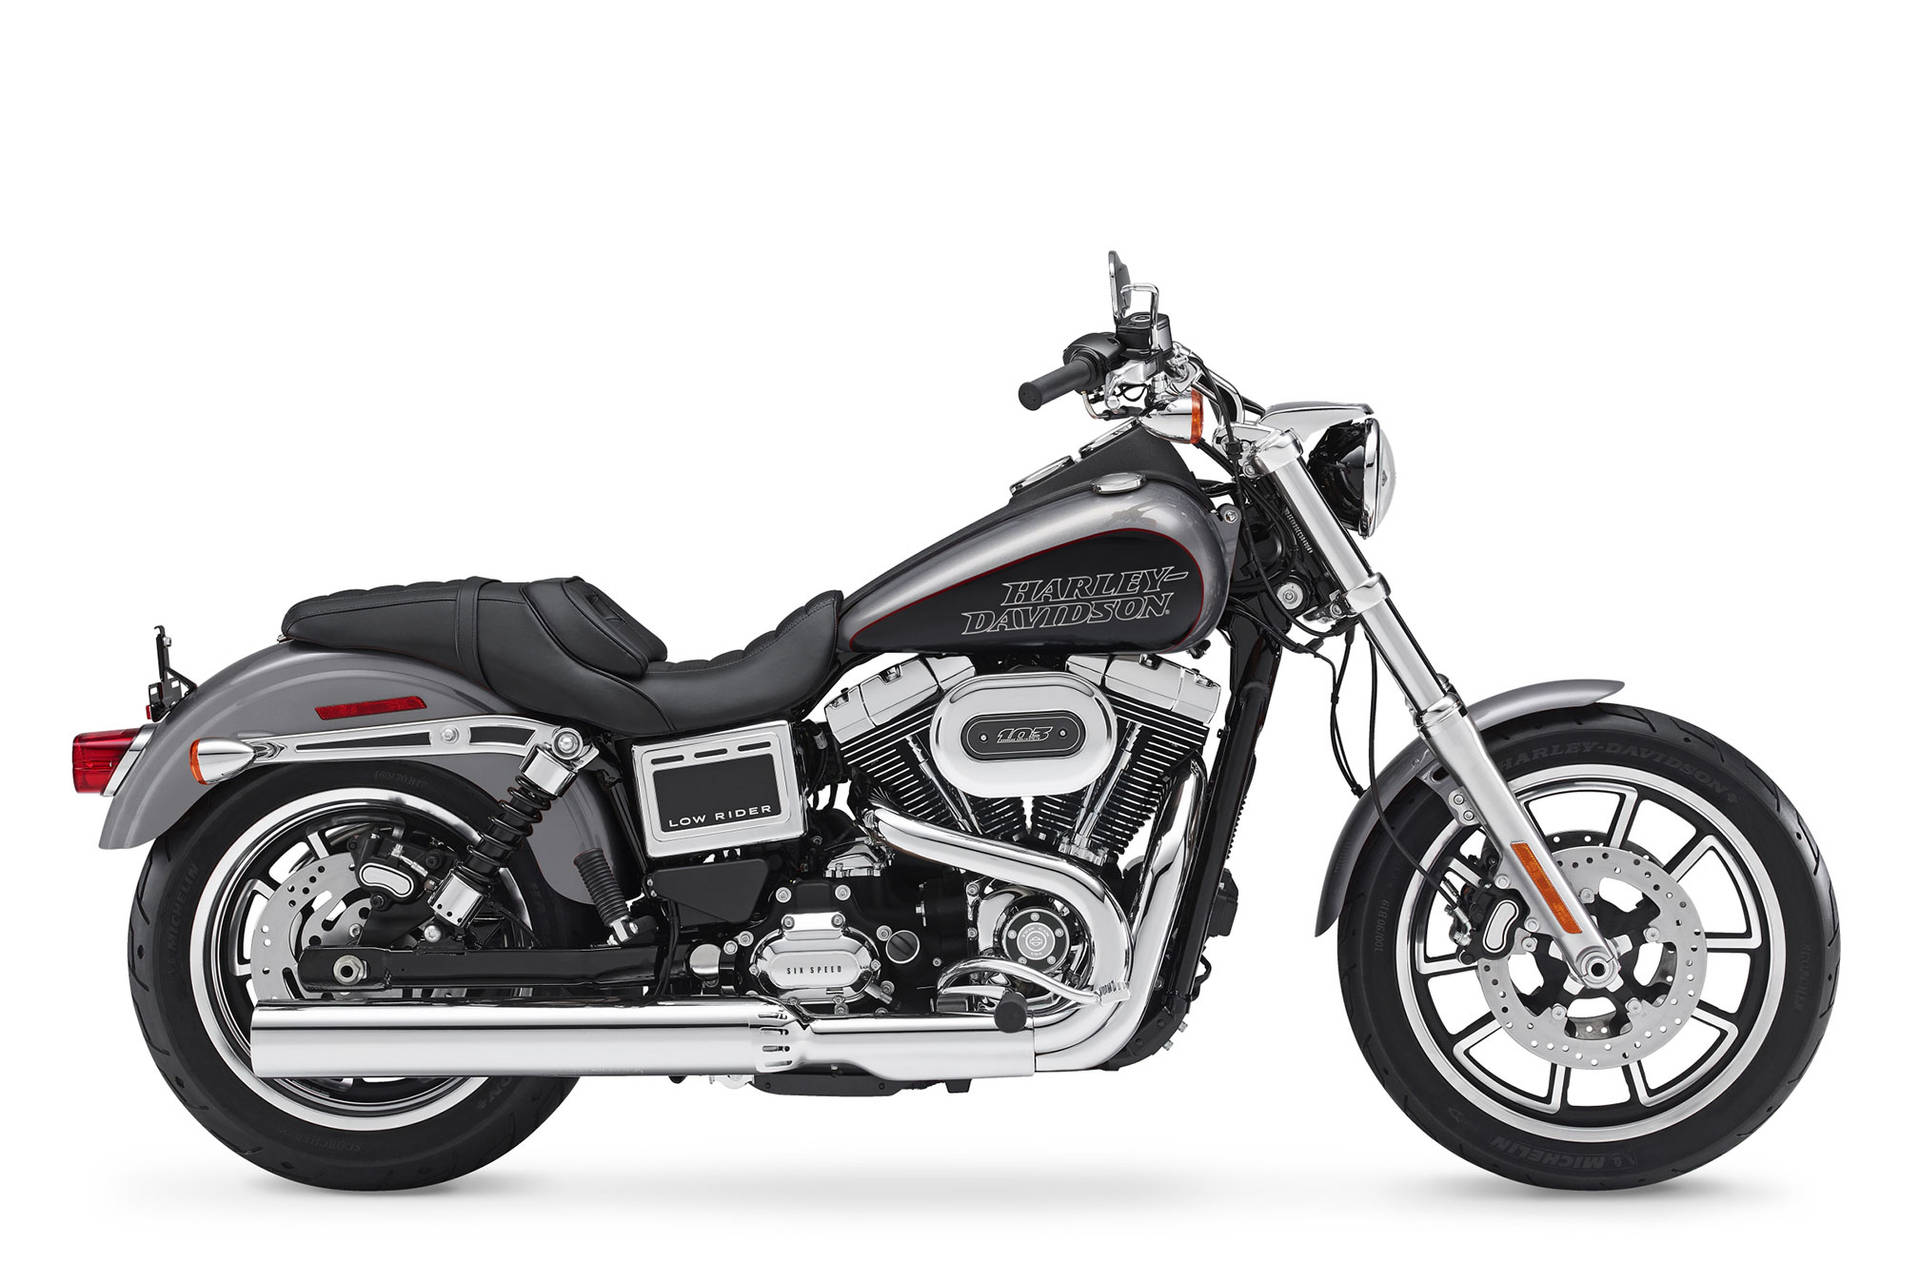 Harley-davidson For Easy Rider Background